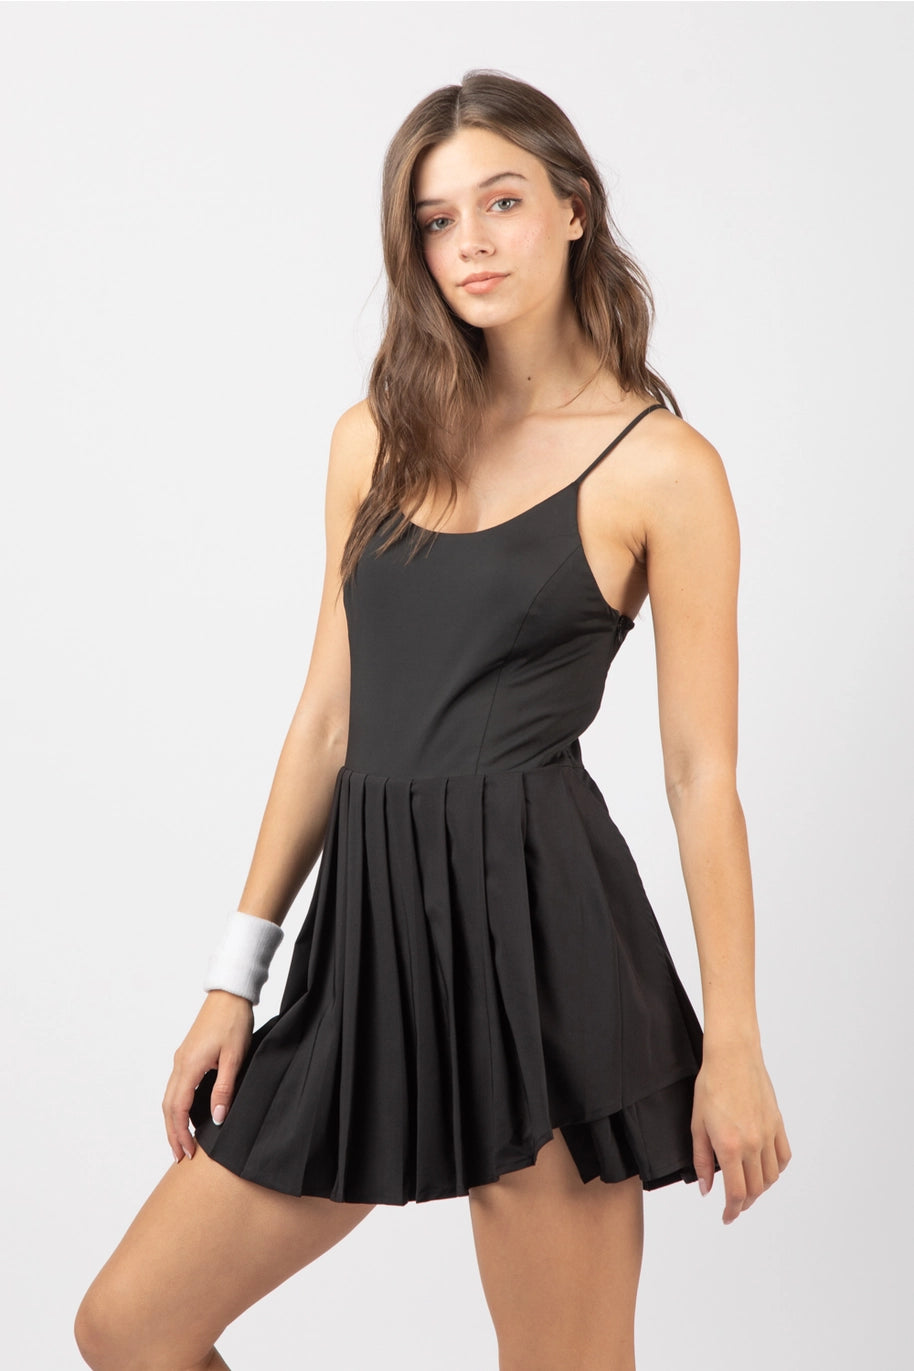 Lapis Tennis Dress - Black